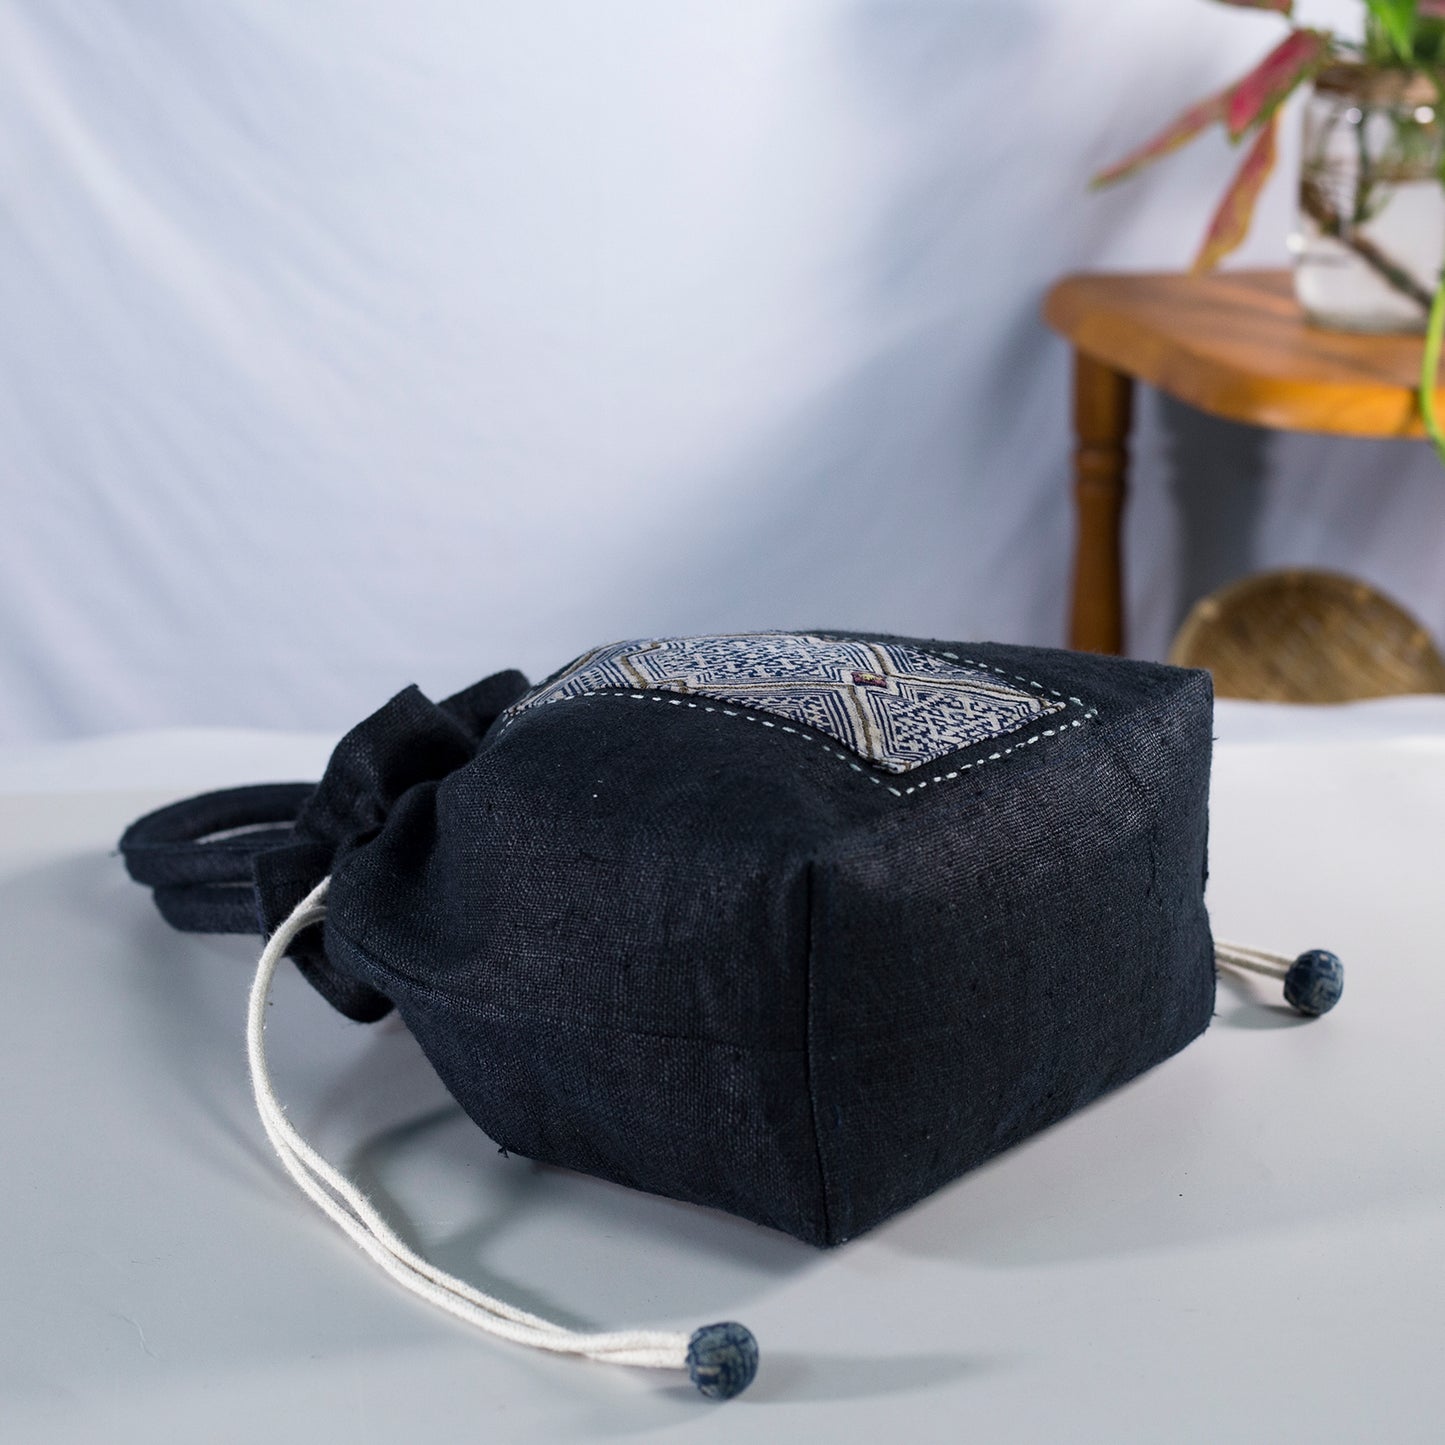 Black drawstring hemp handbag, natural hemp and batik patch